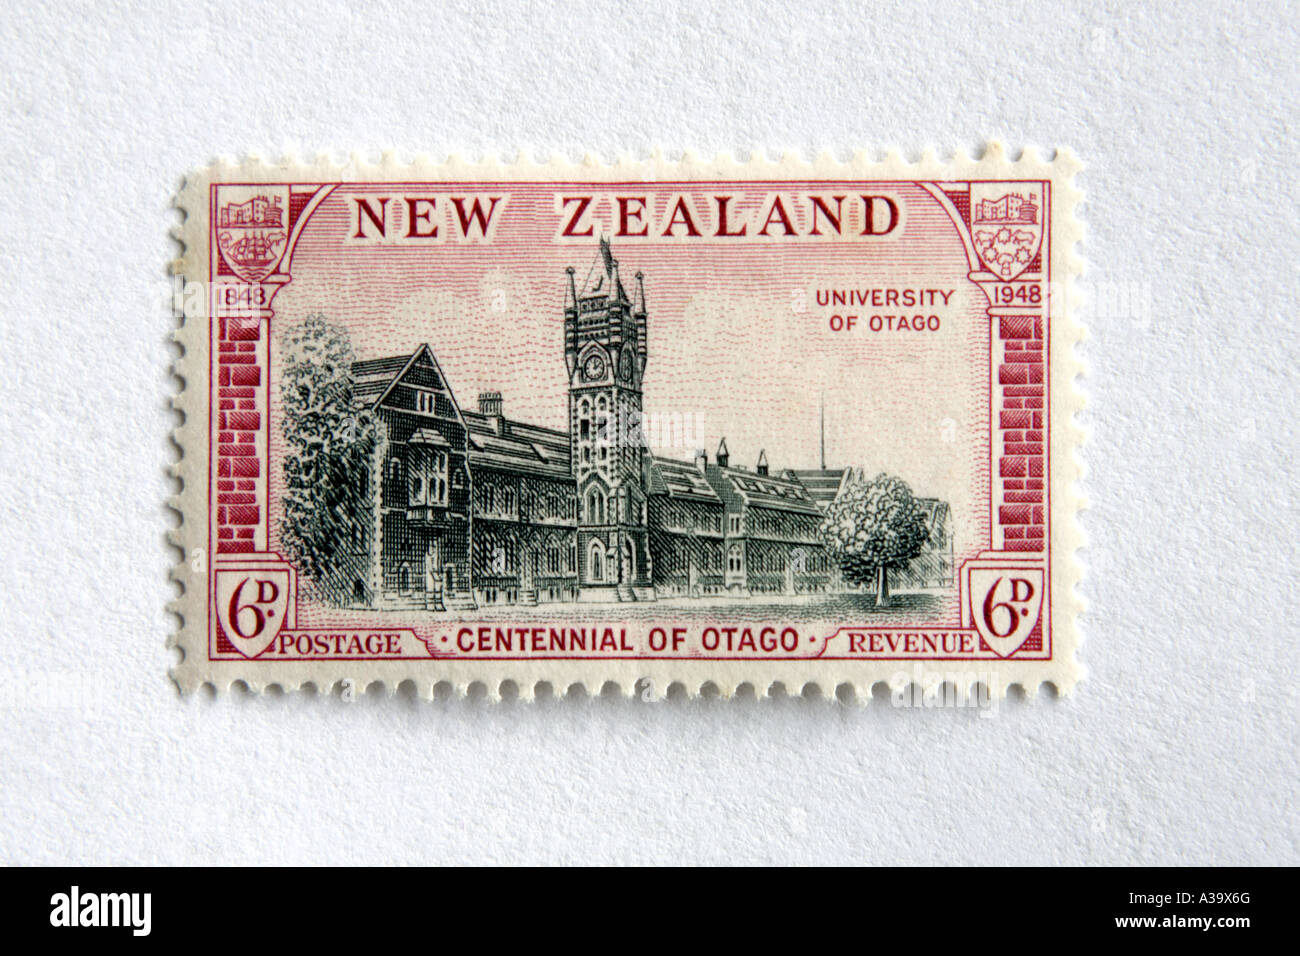 New Zealand postage stamp Stock Photo